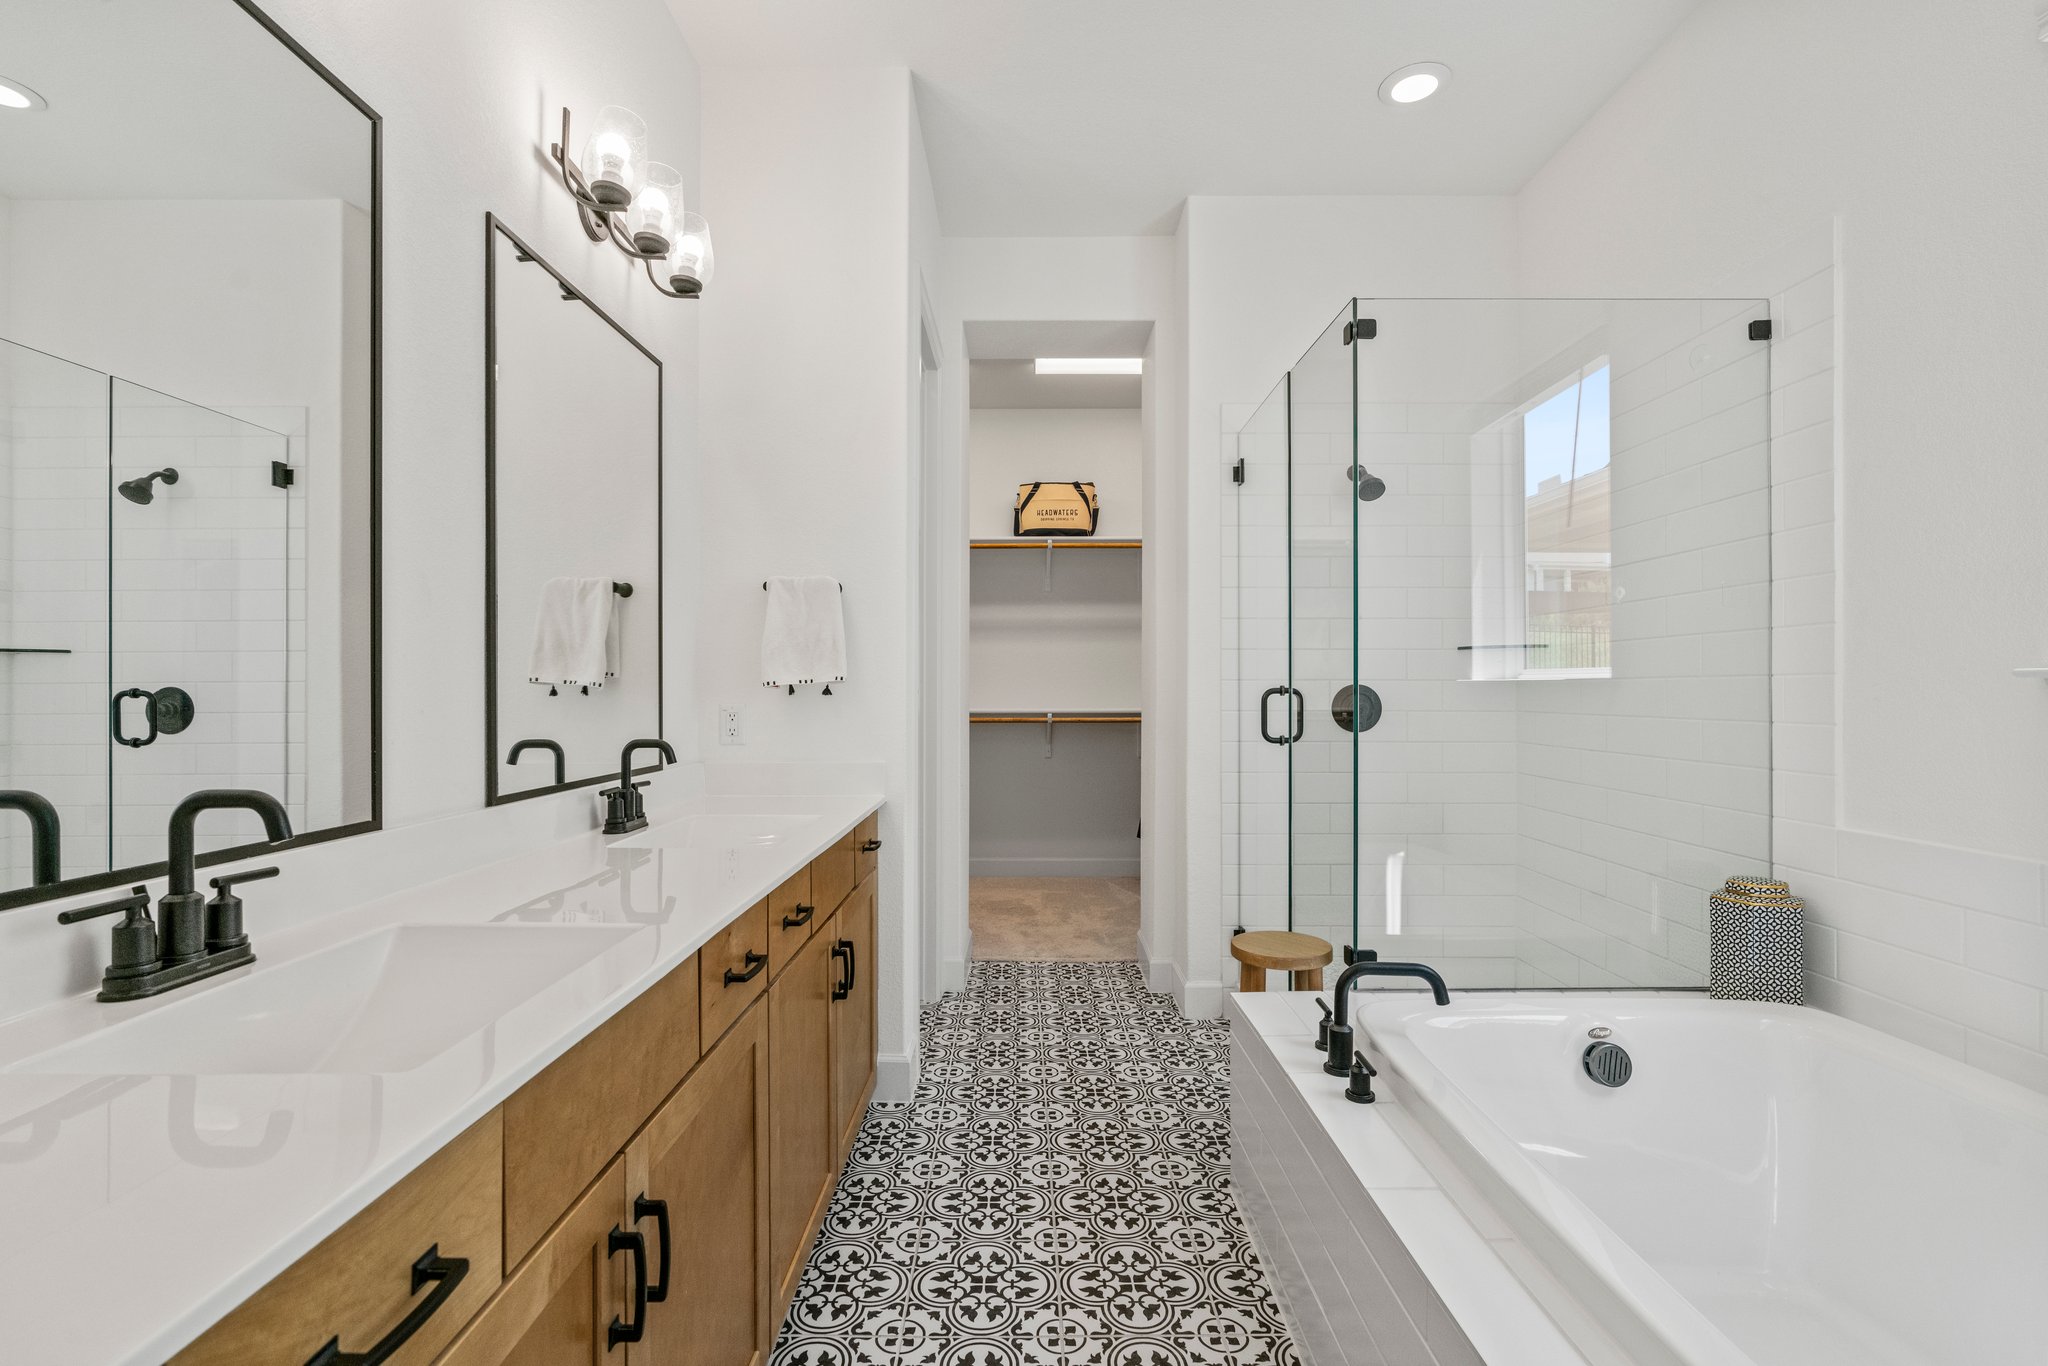 Dual sinks, soaking tub, glass enclosed shower